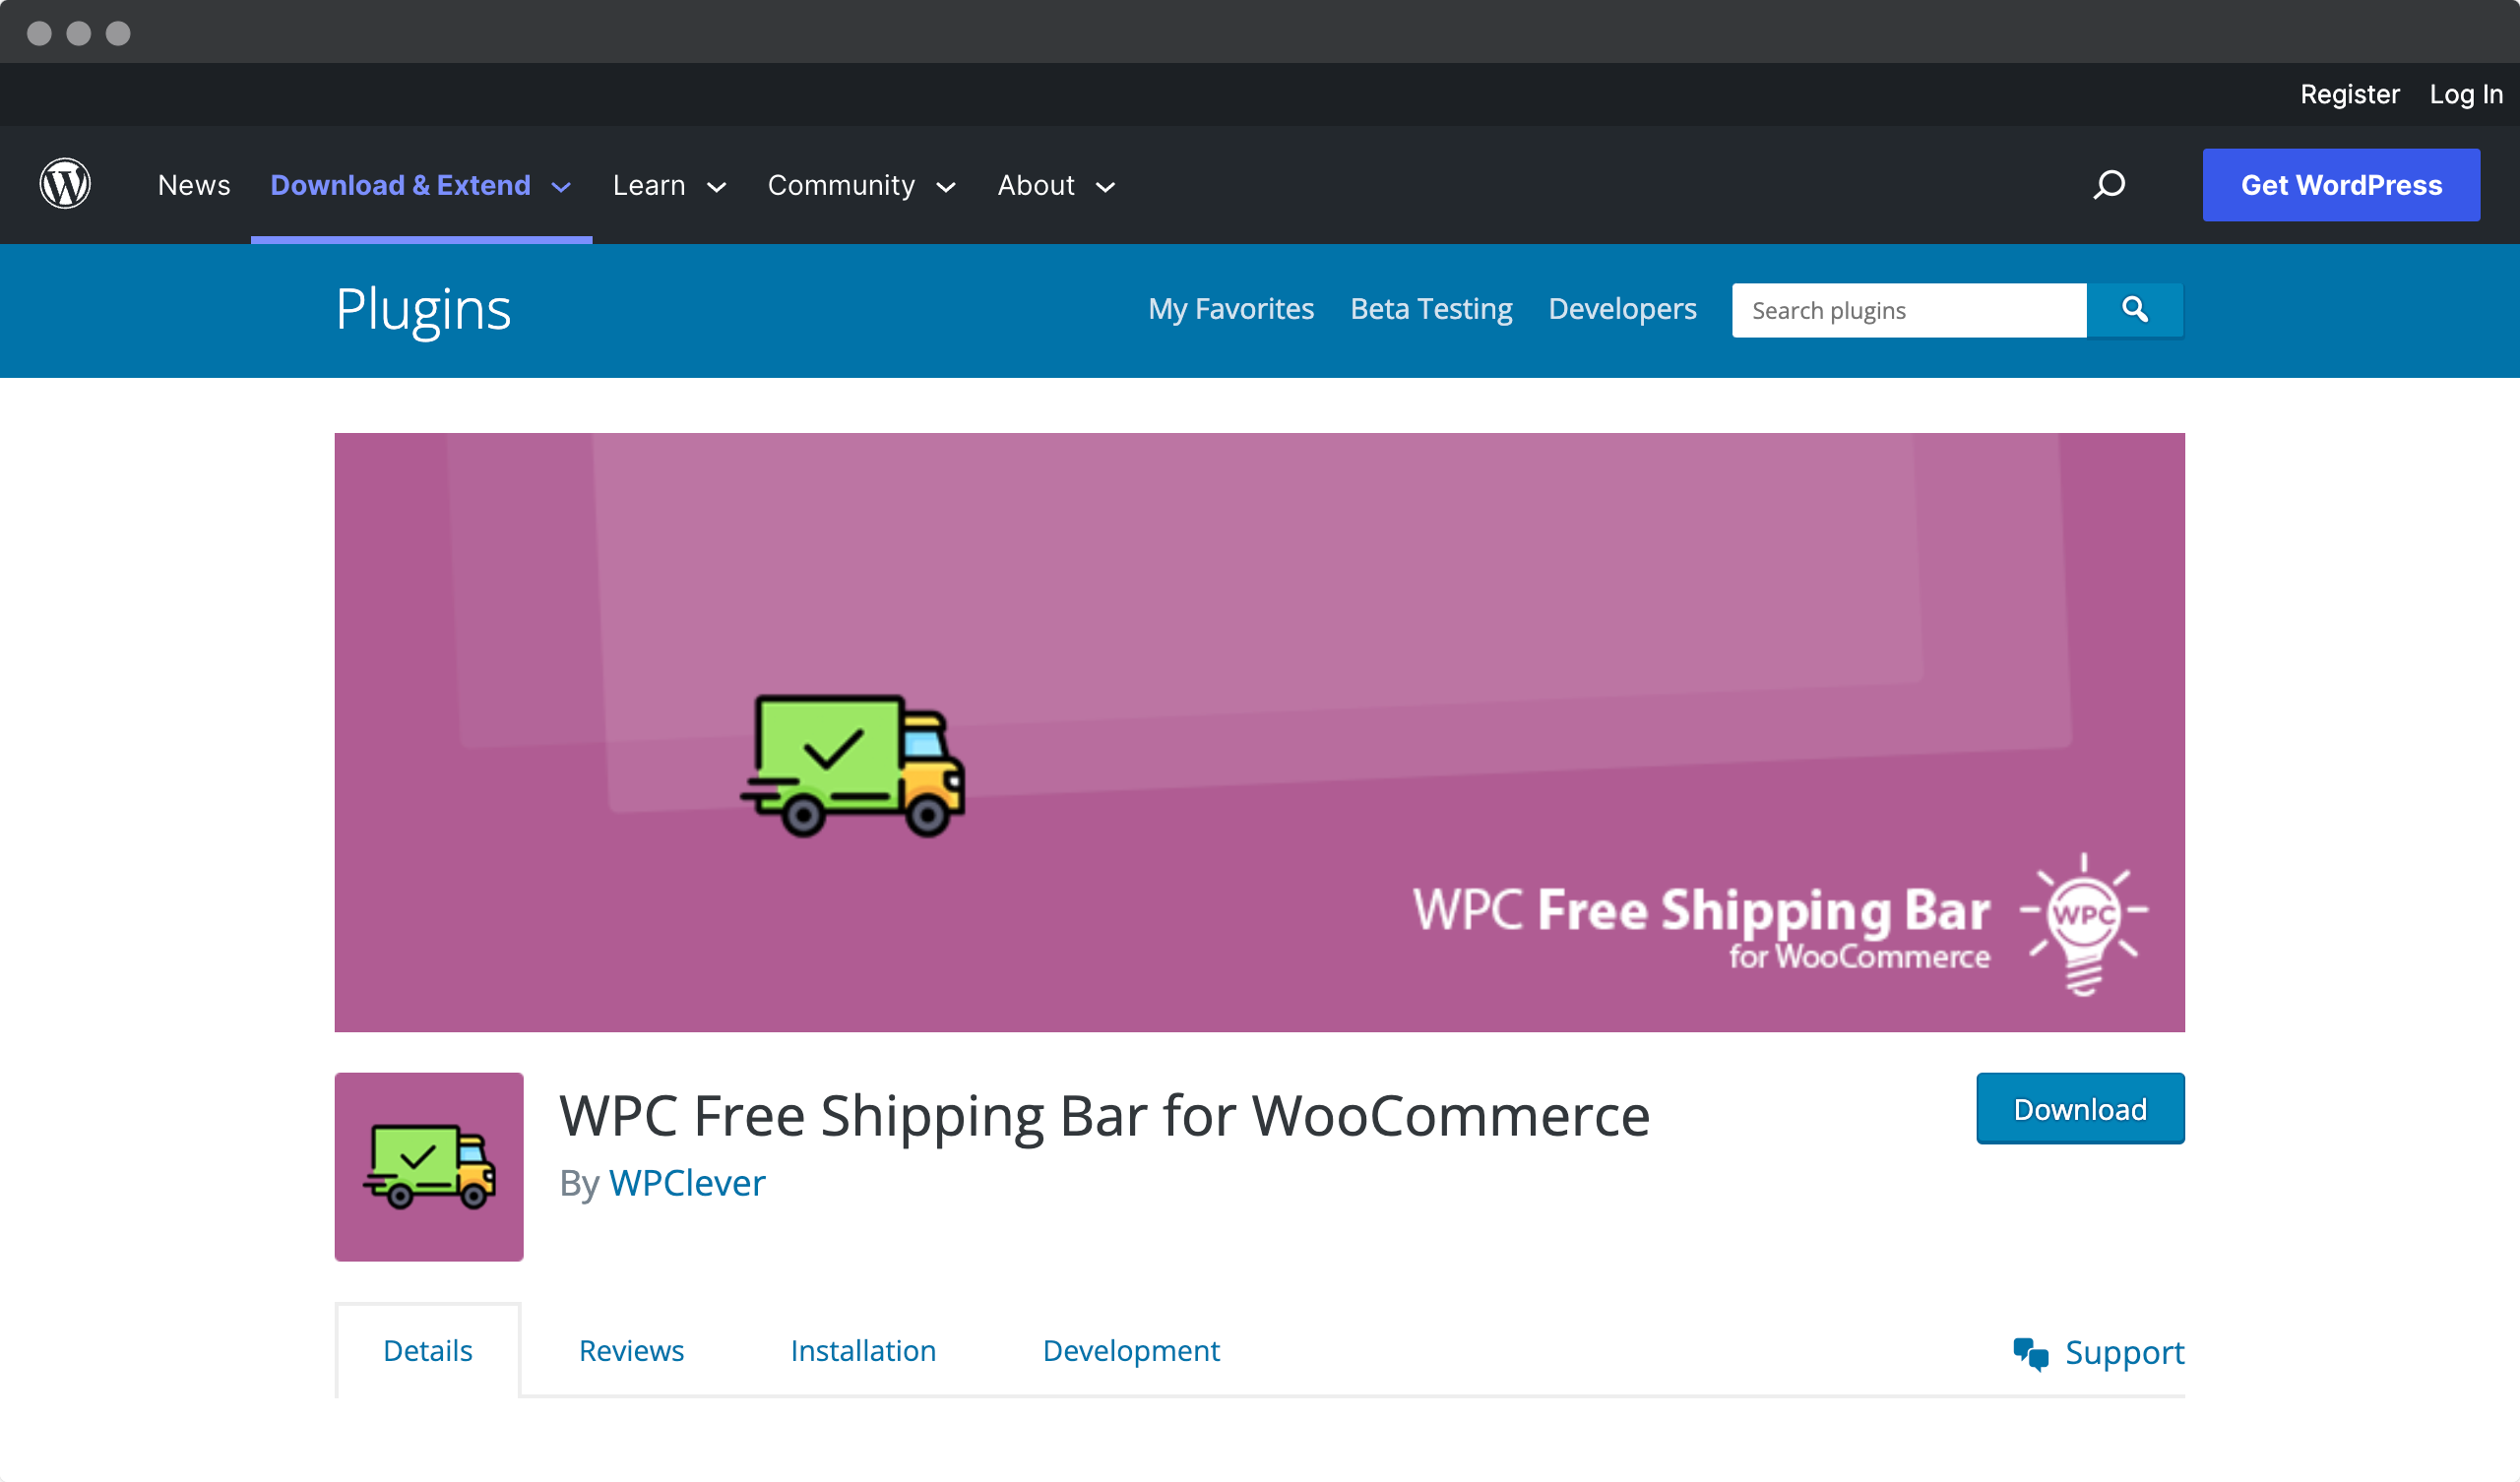 Screenshot of wordpress website - WPClever Free shippinb bar for woocommerce plugin